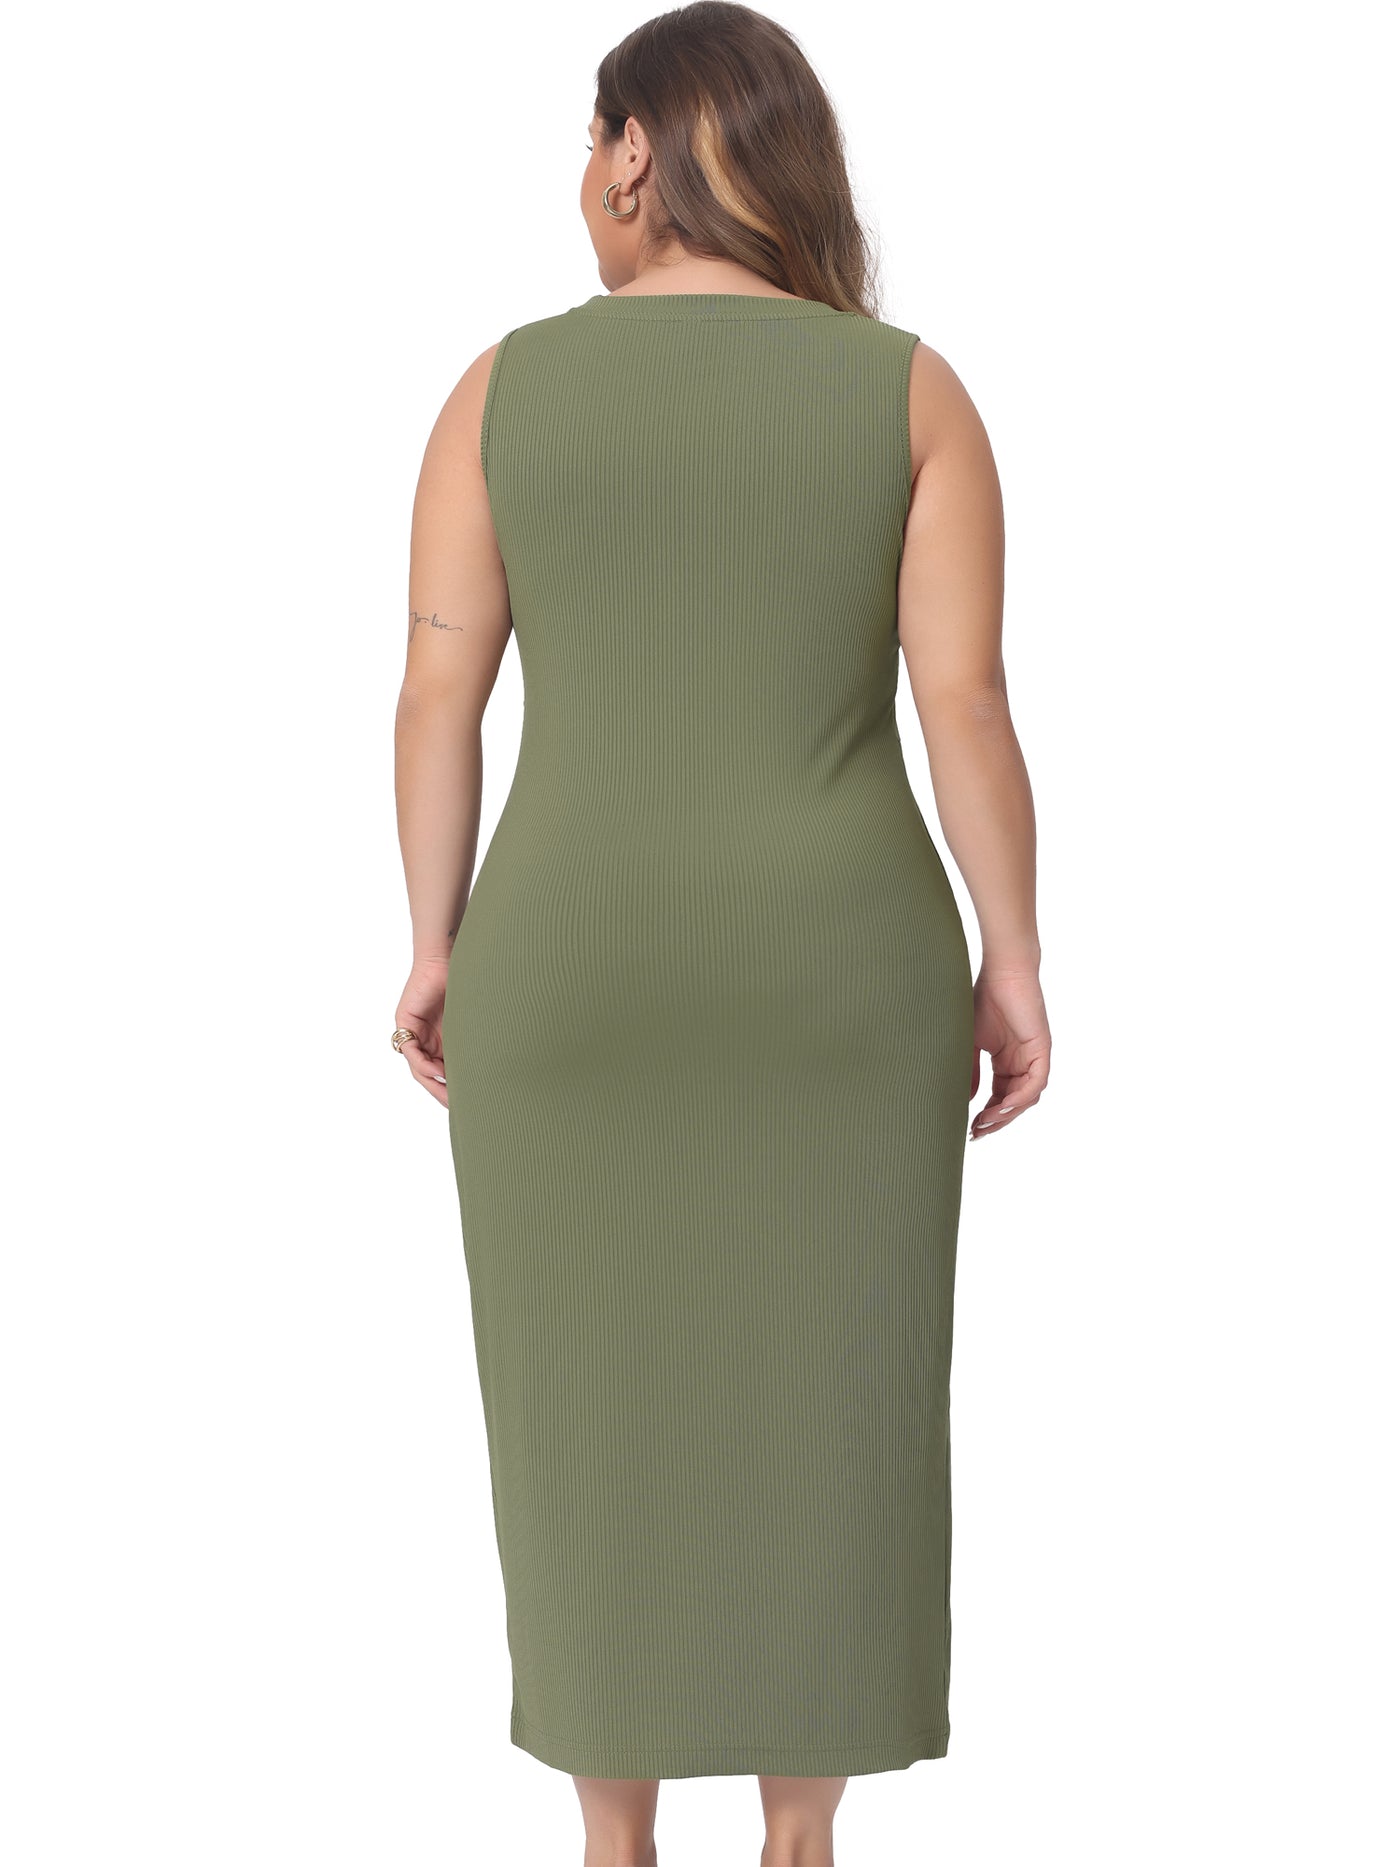 Bublédon Plus Size Bodycon Dress for Women Elegant Knit Slit Tank Midi Ruched Sleeveless Summer Dresses